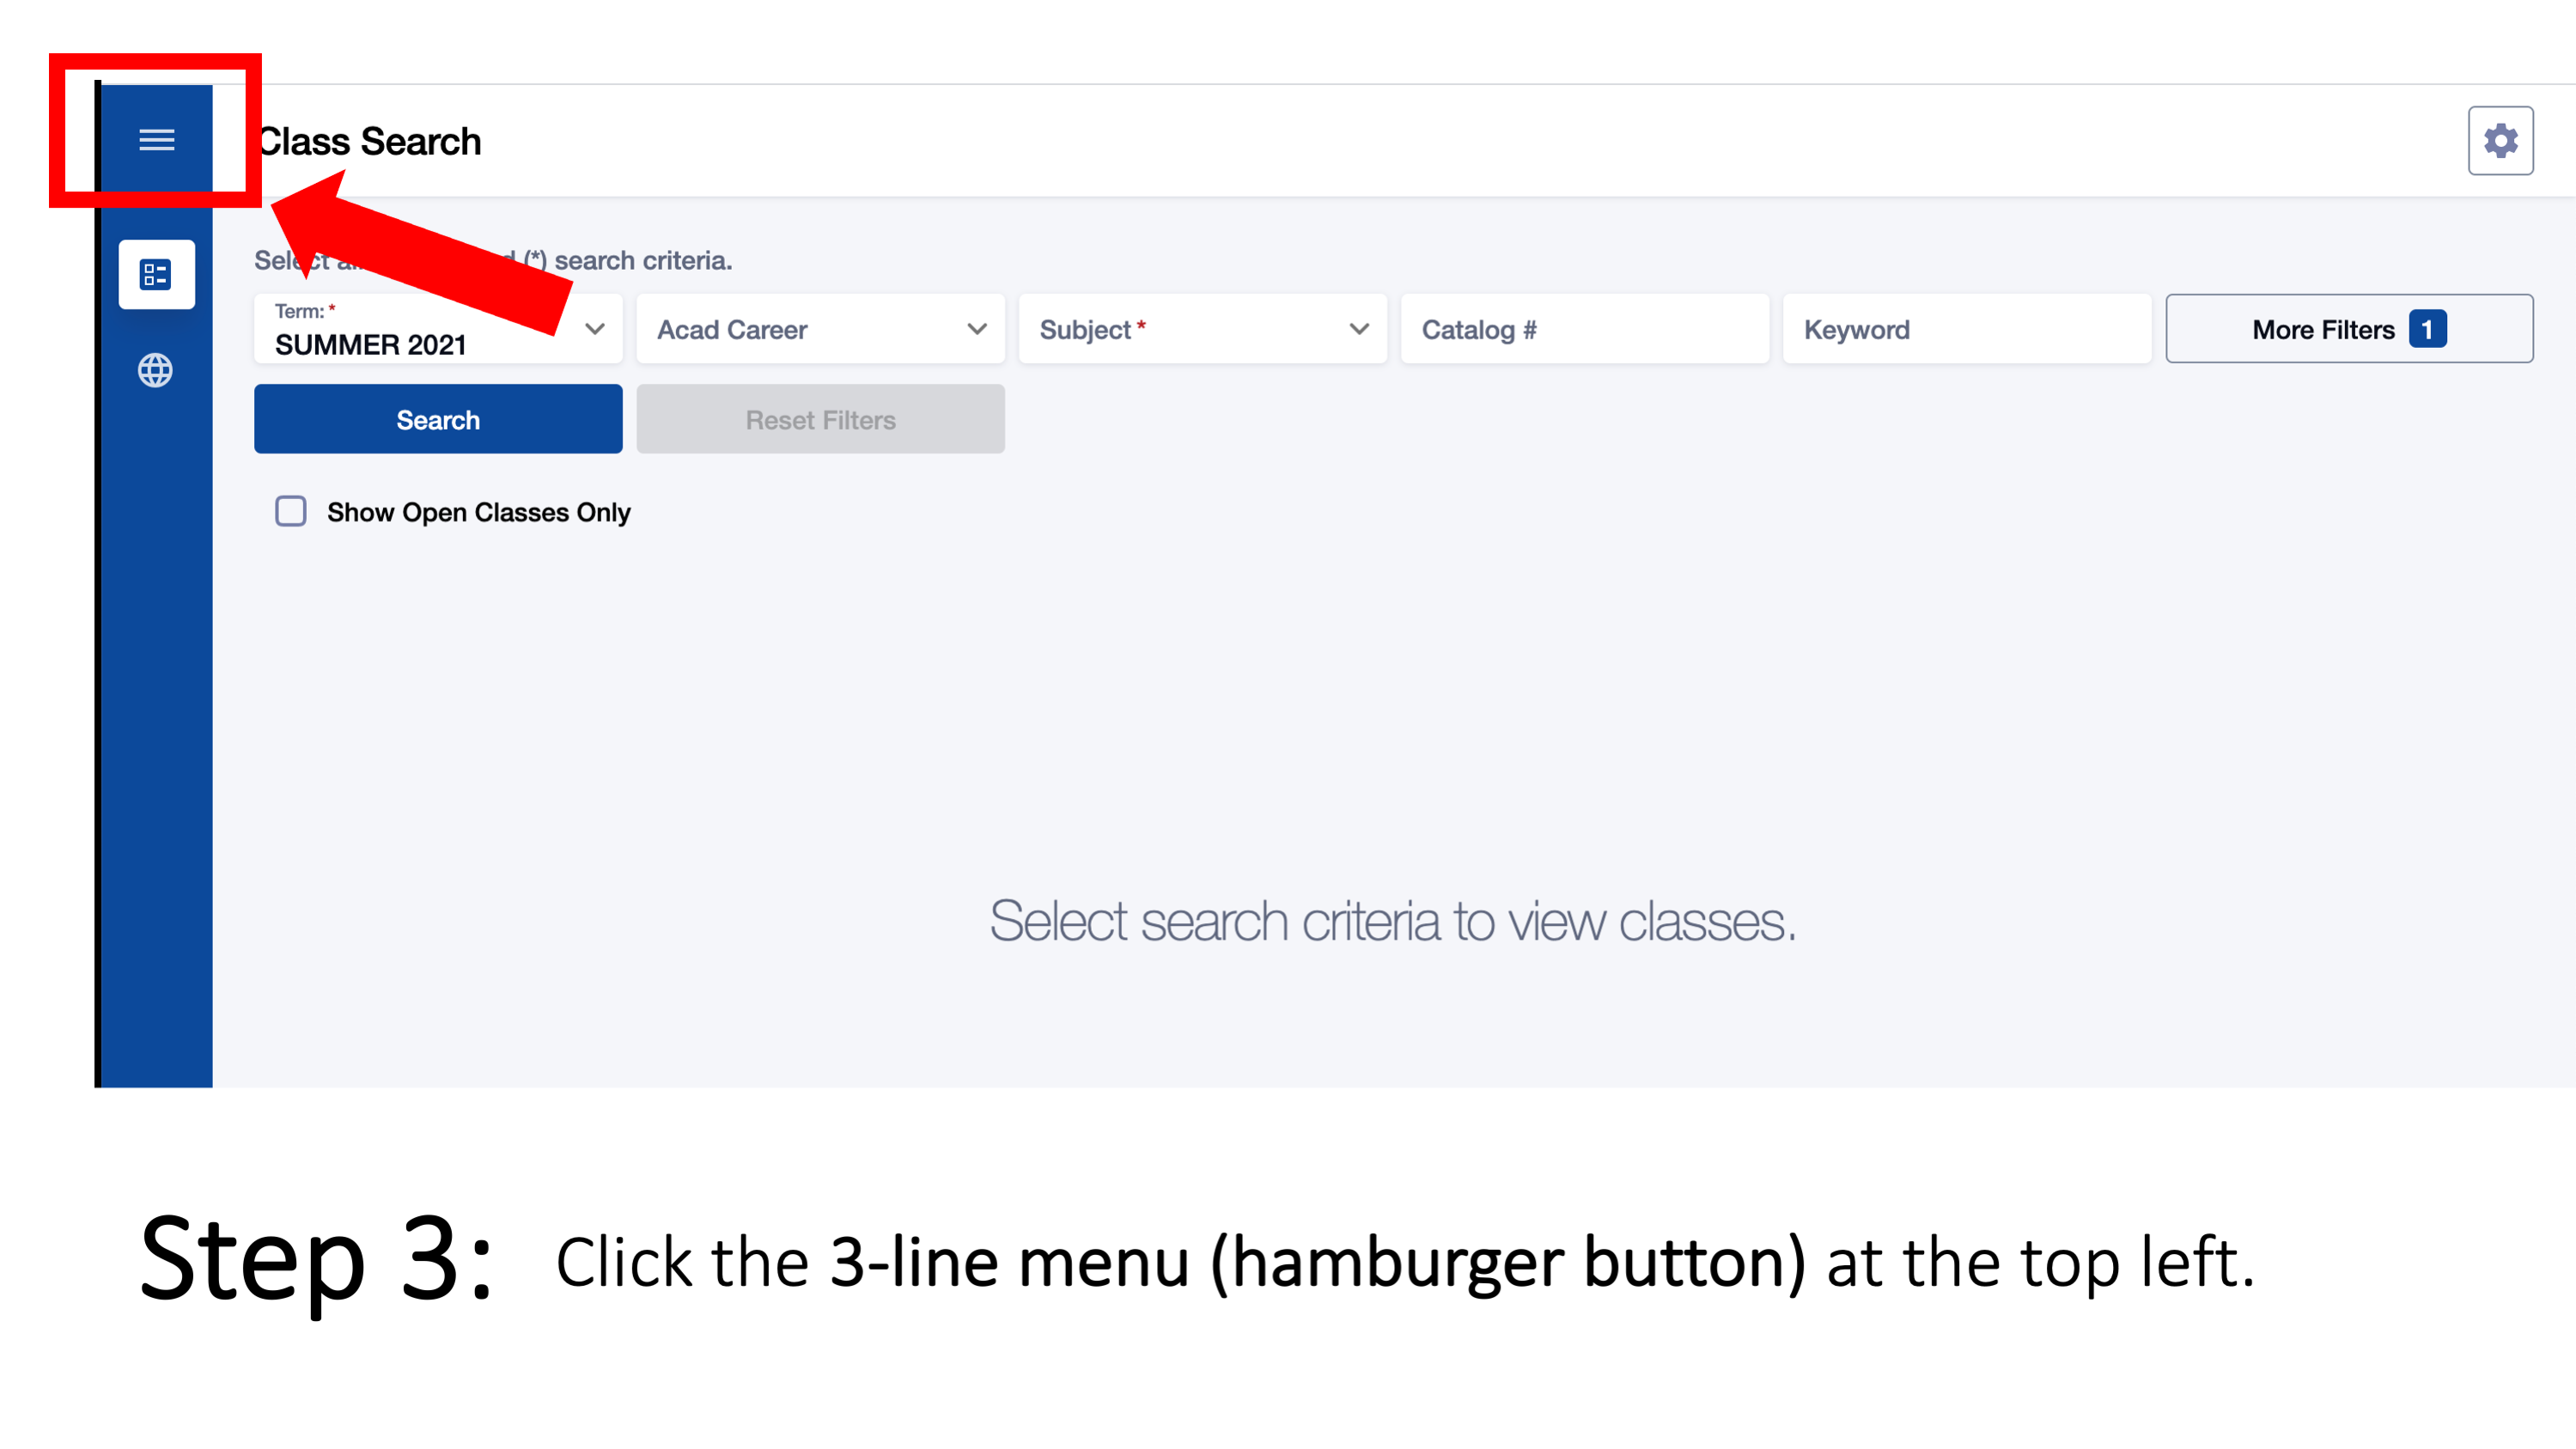 Step 3: Click the 3-line menu (hamburger button) at the top left.